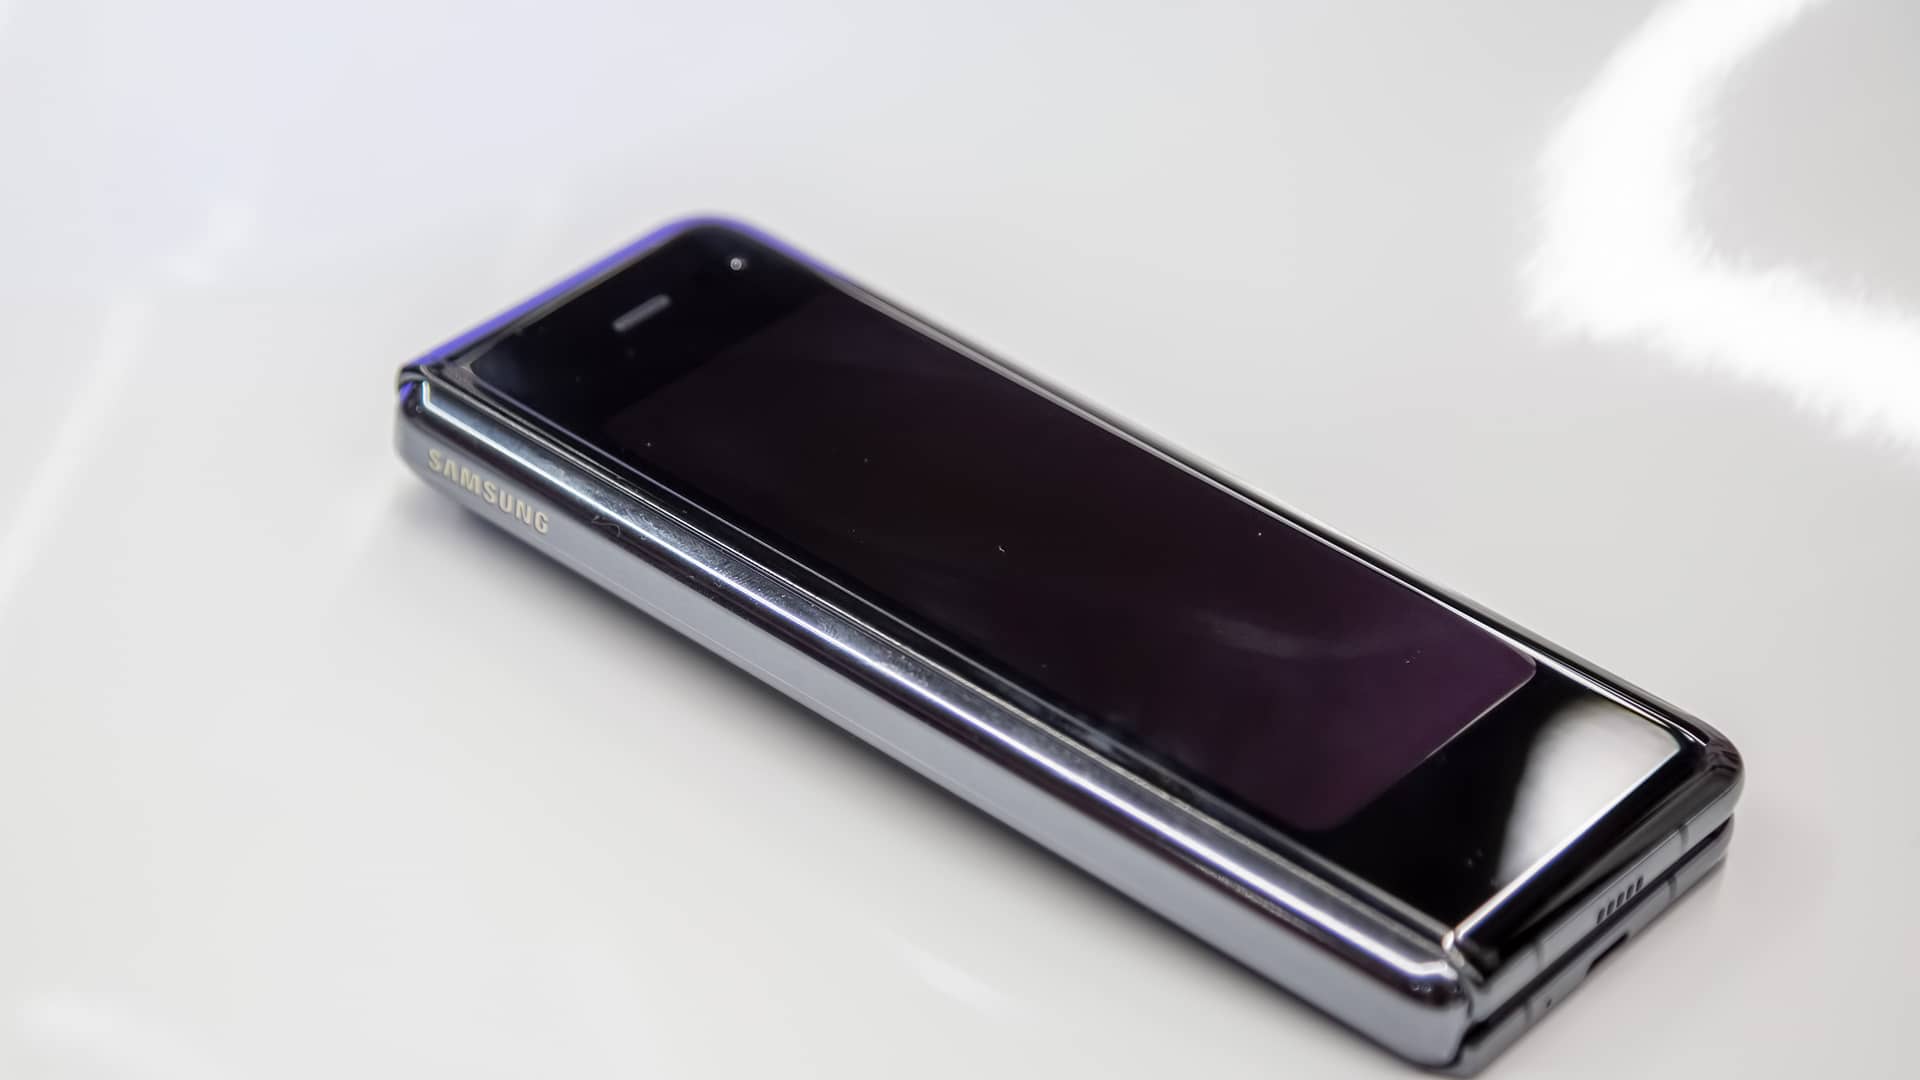 Nuevo smartphone insignia Samsung Galaxy Fold con pantalla flexible